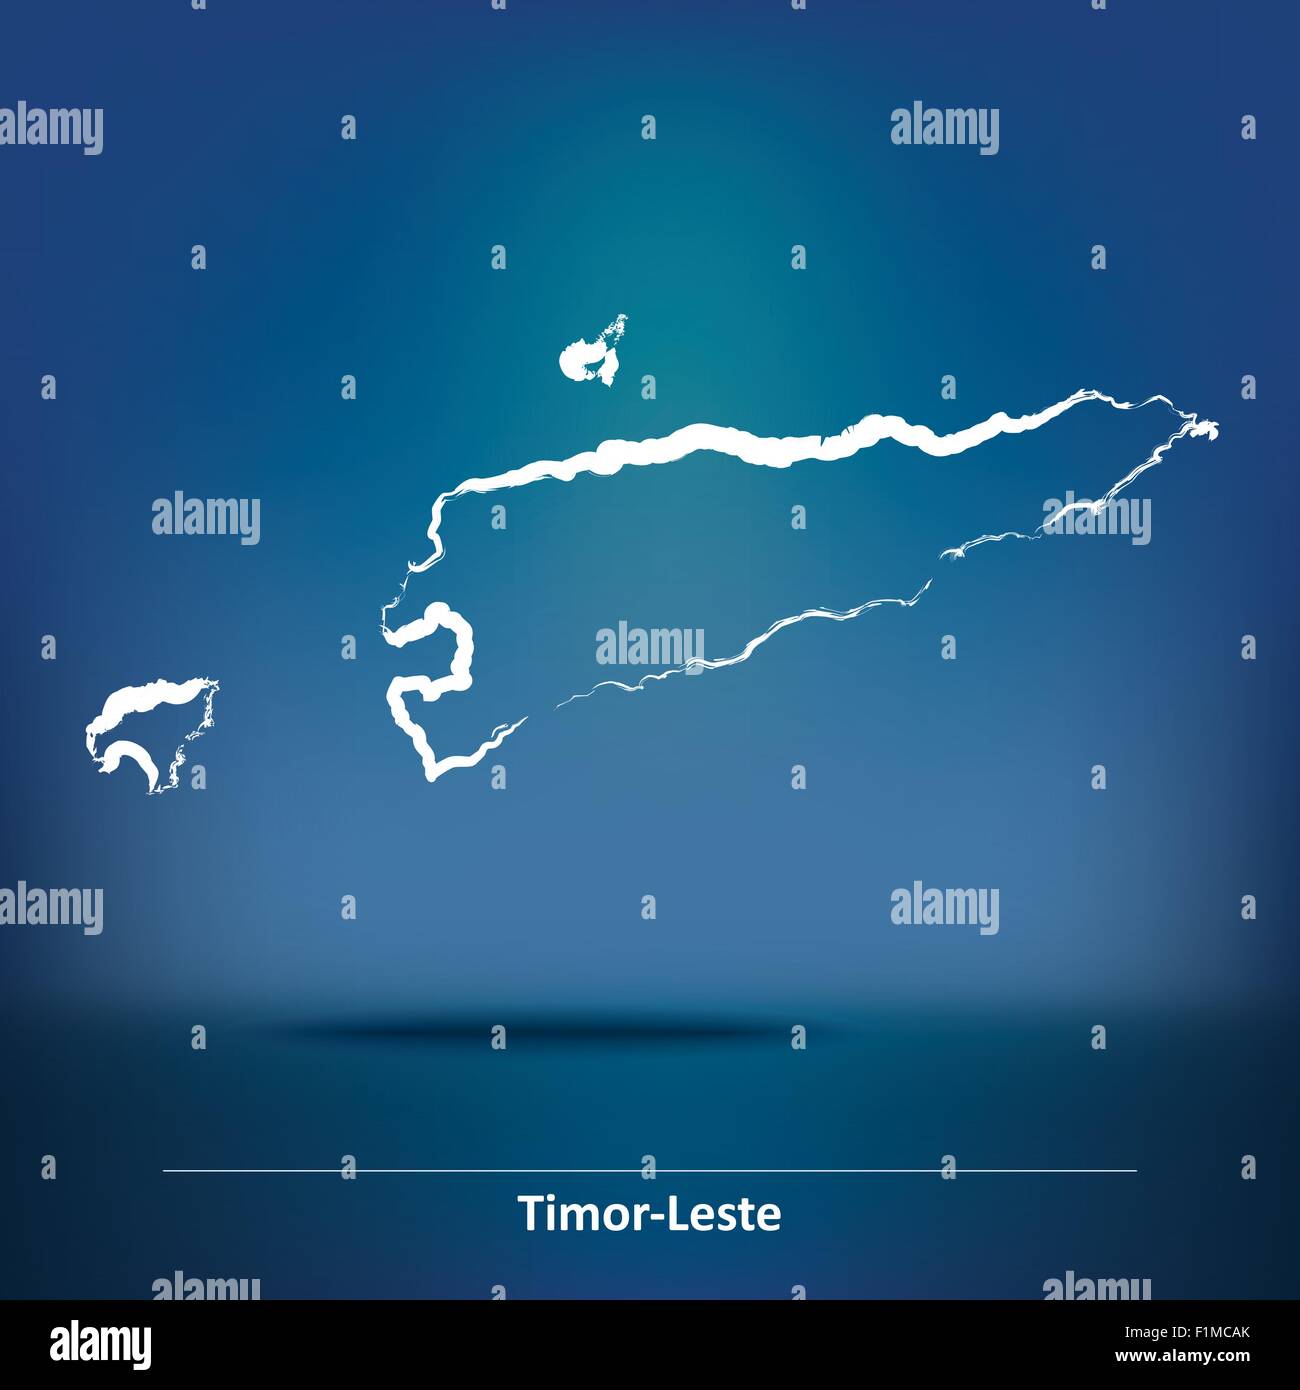 Doodle Map of Timor-Leste - vector illustration Stock Vector